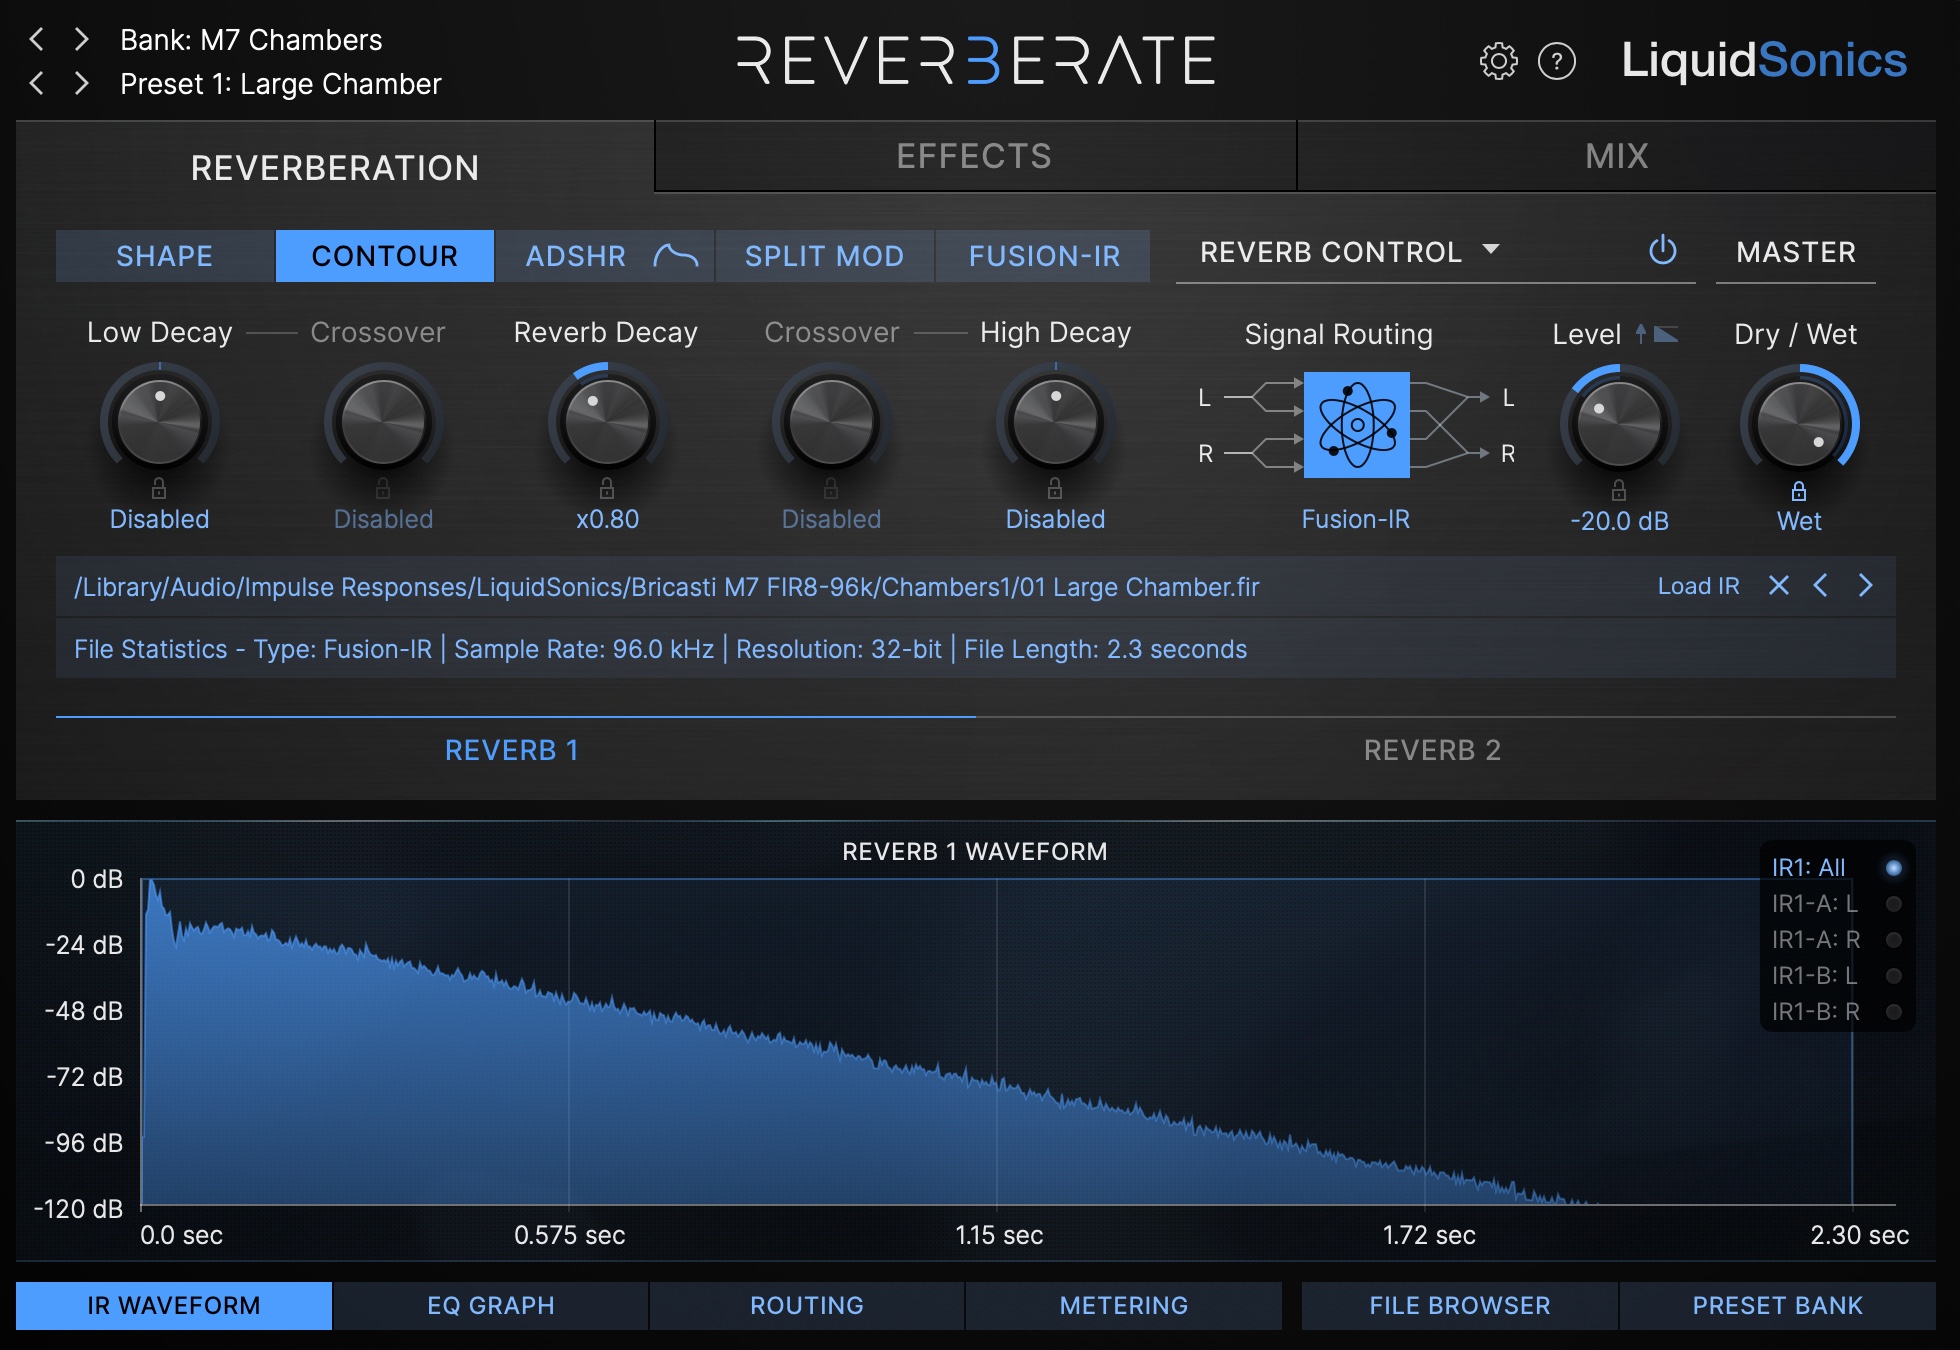 Reverberate-3-Reverb-Contour-1.jpg